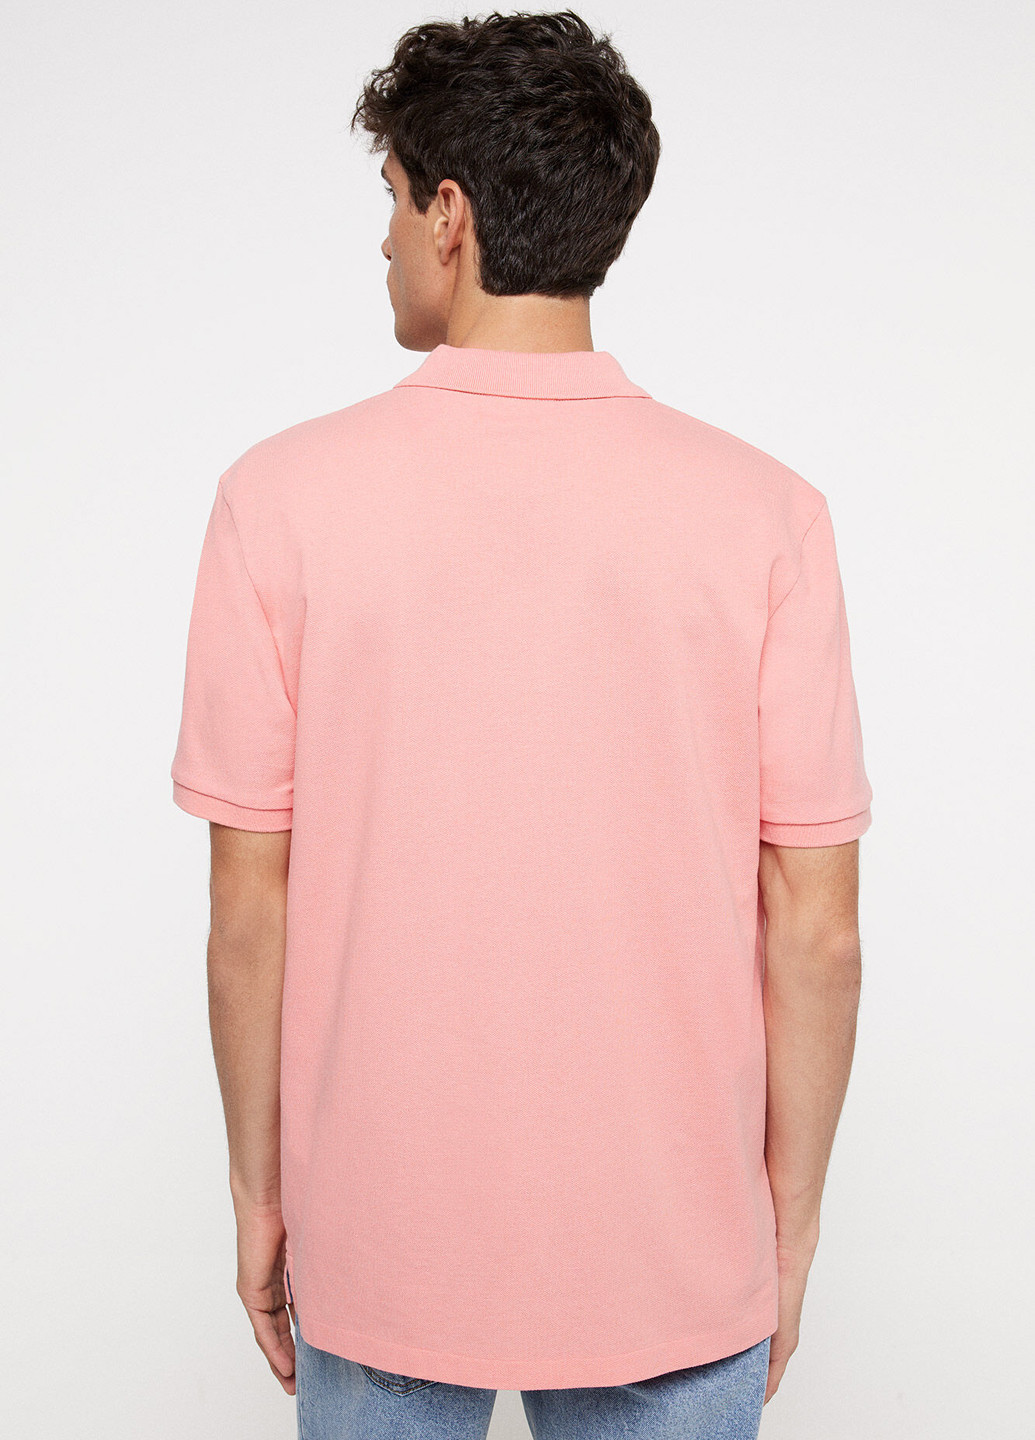 Розовая футболка-поло для мужчин Springfield однотонная